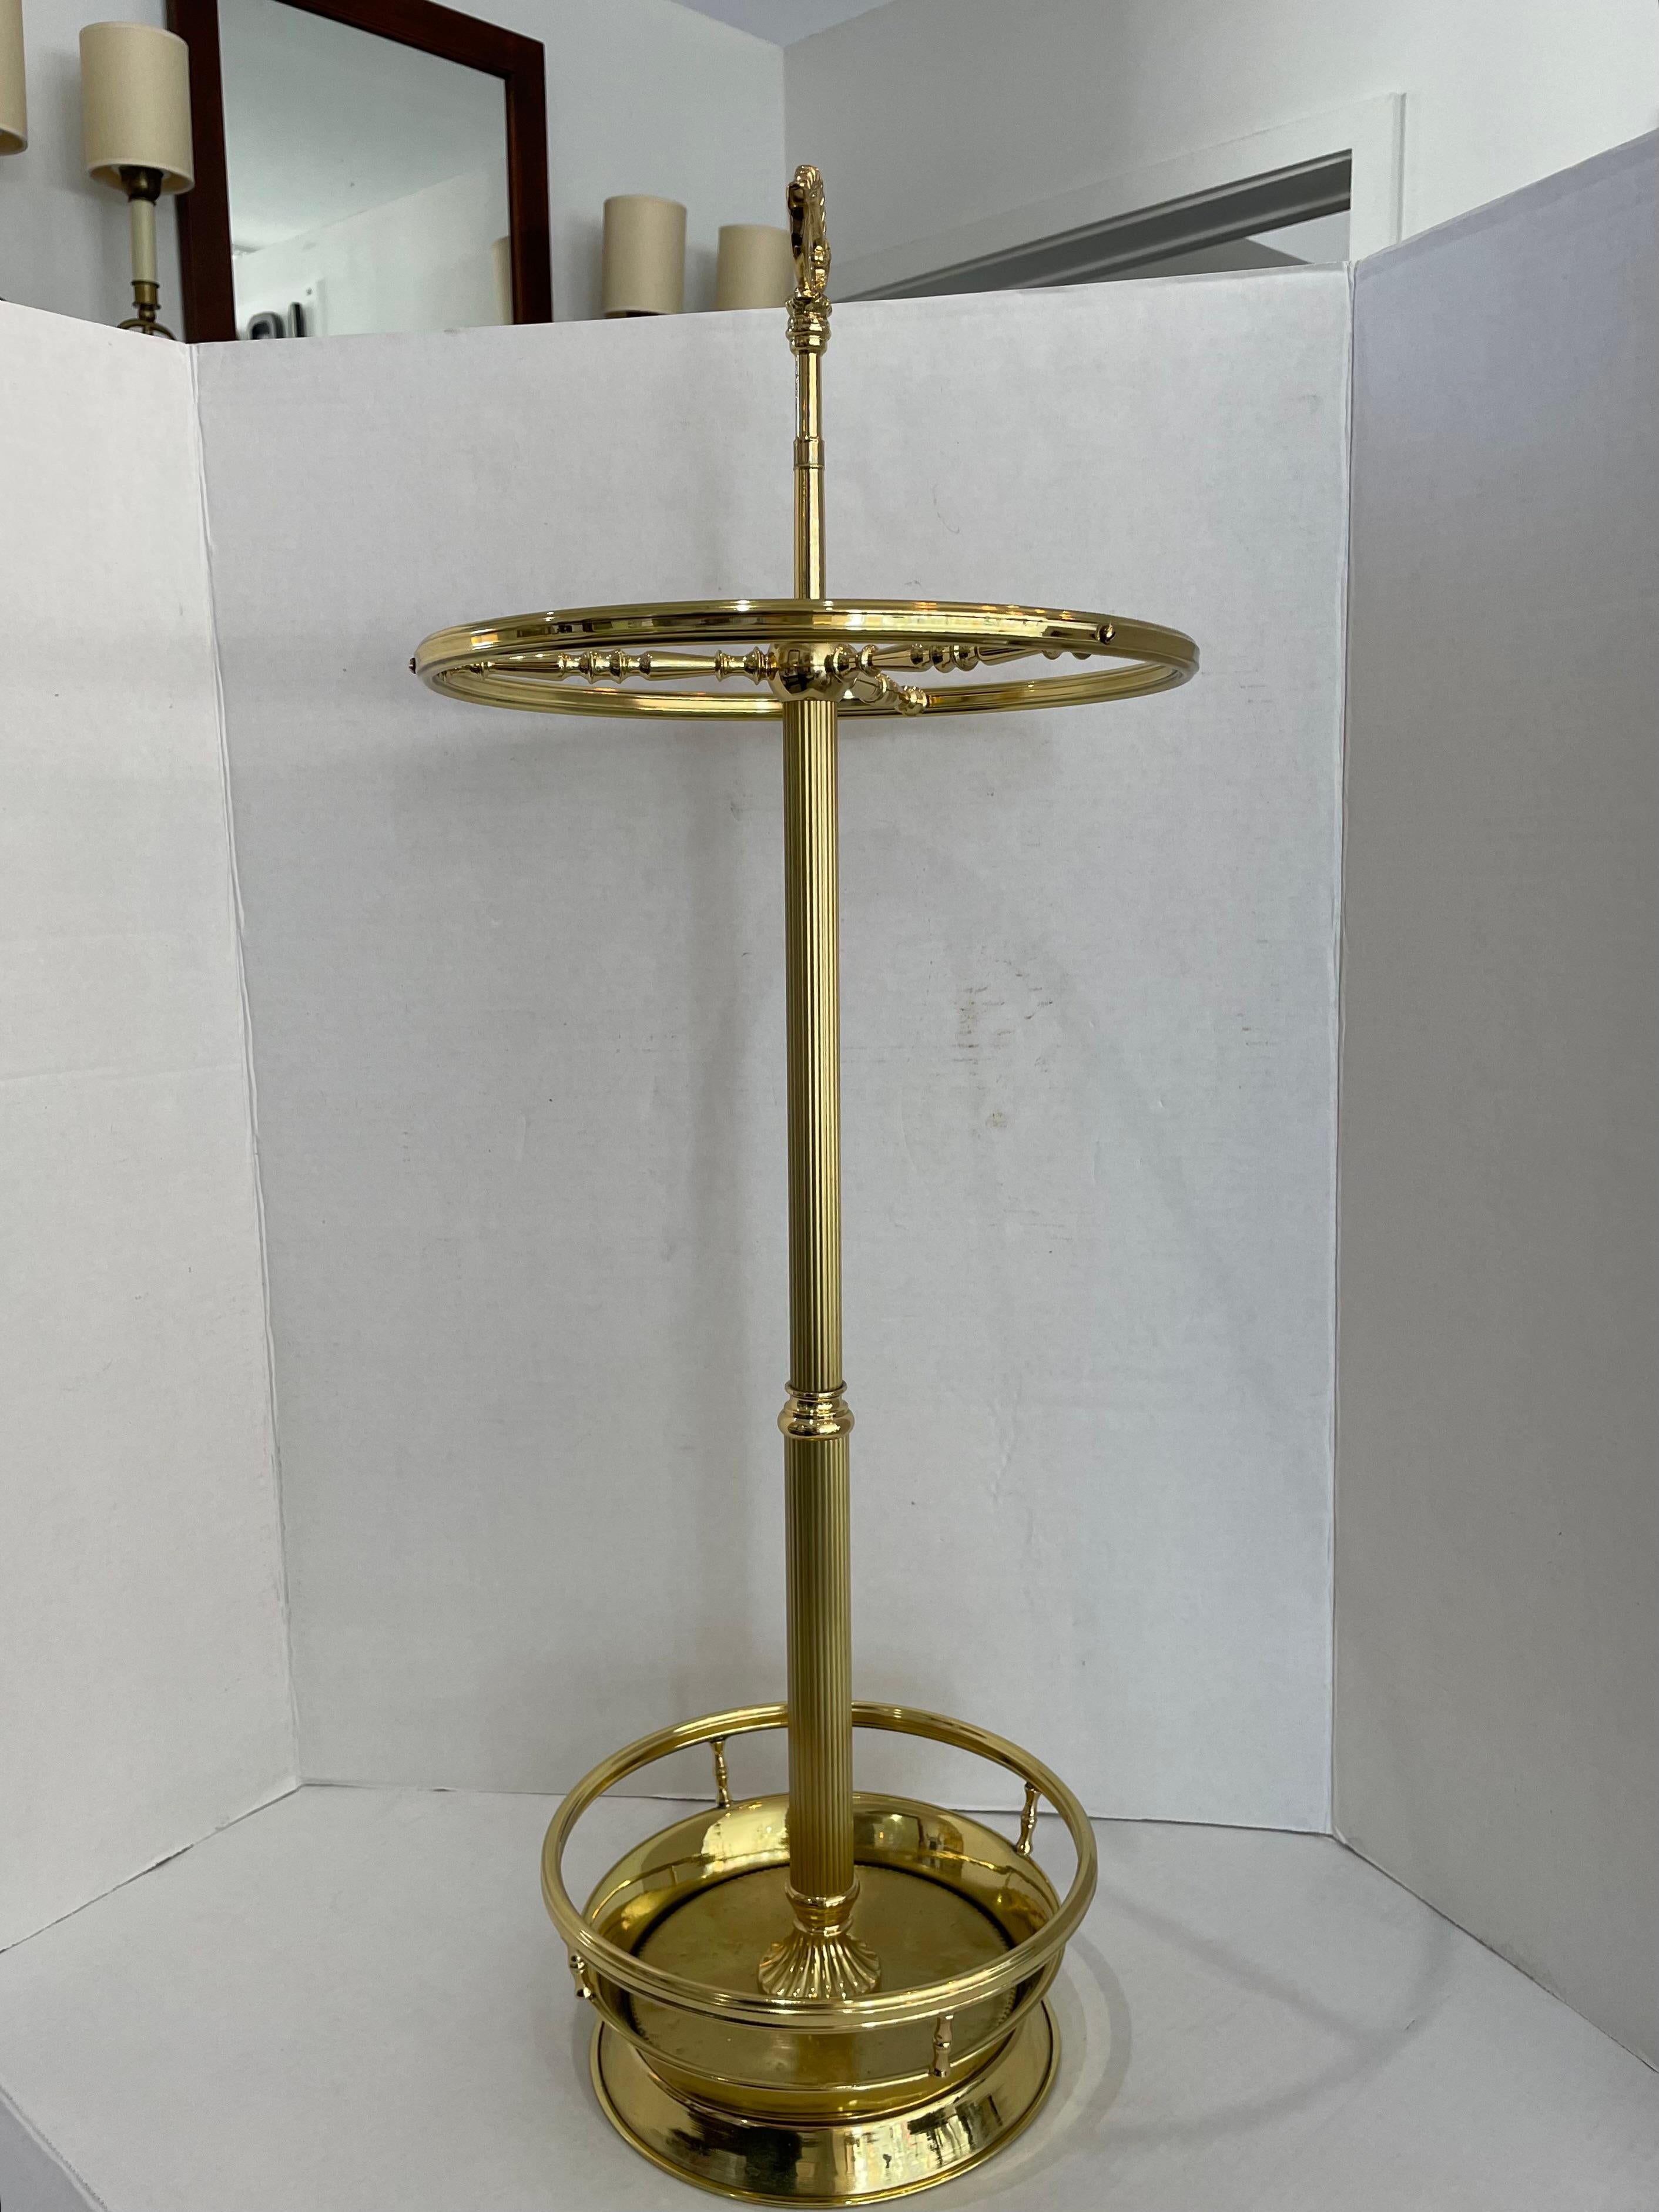 Cast Italian Brass Umbrella Stand by F.III ORNSEIGO For Sale